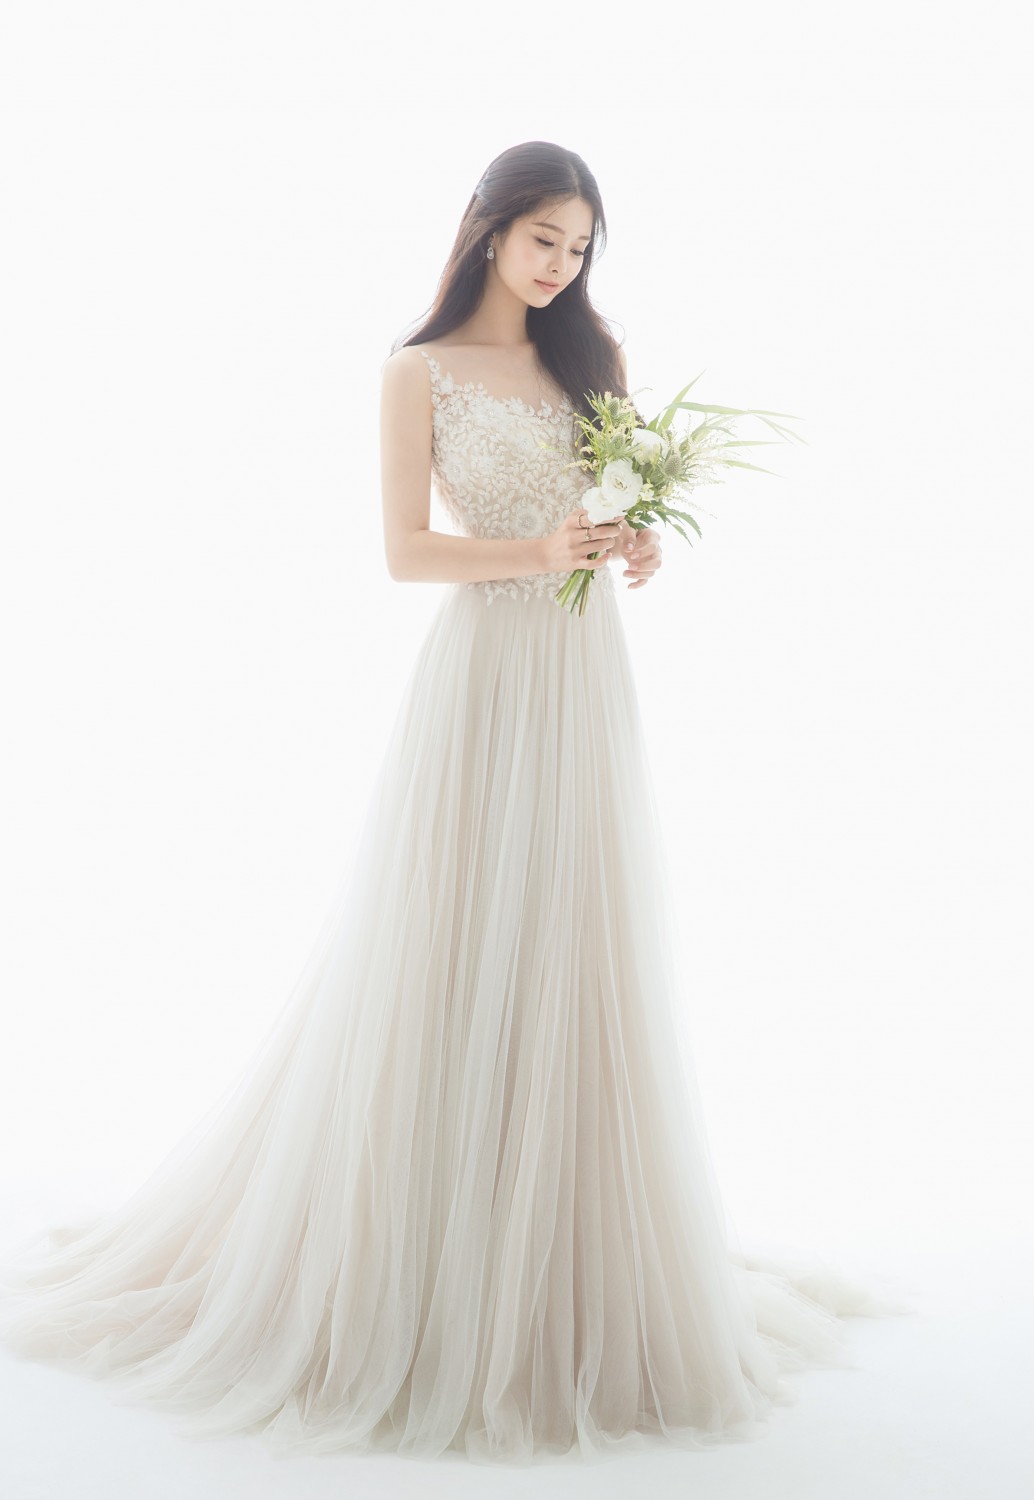 KOREAN WEDDING A-009 ANDYOO STUDIO : korea wedding pledge